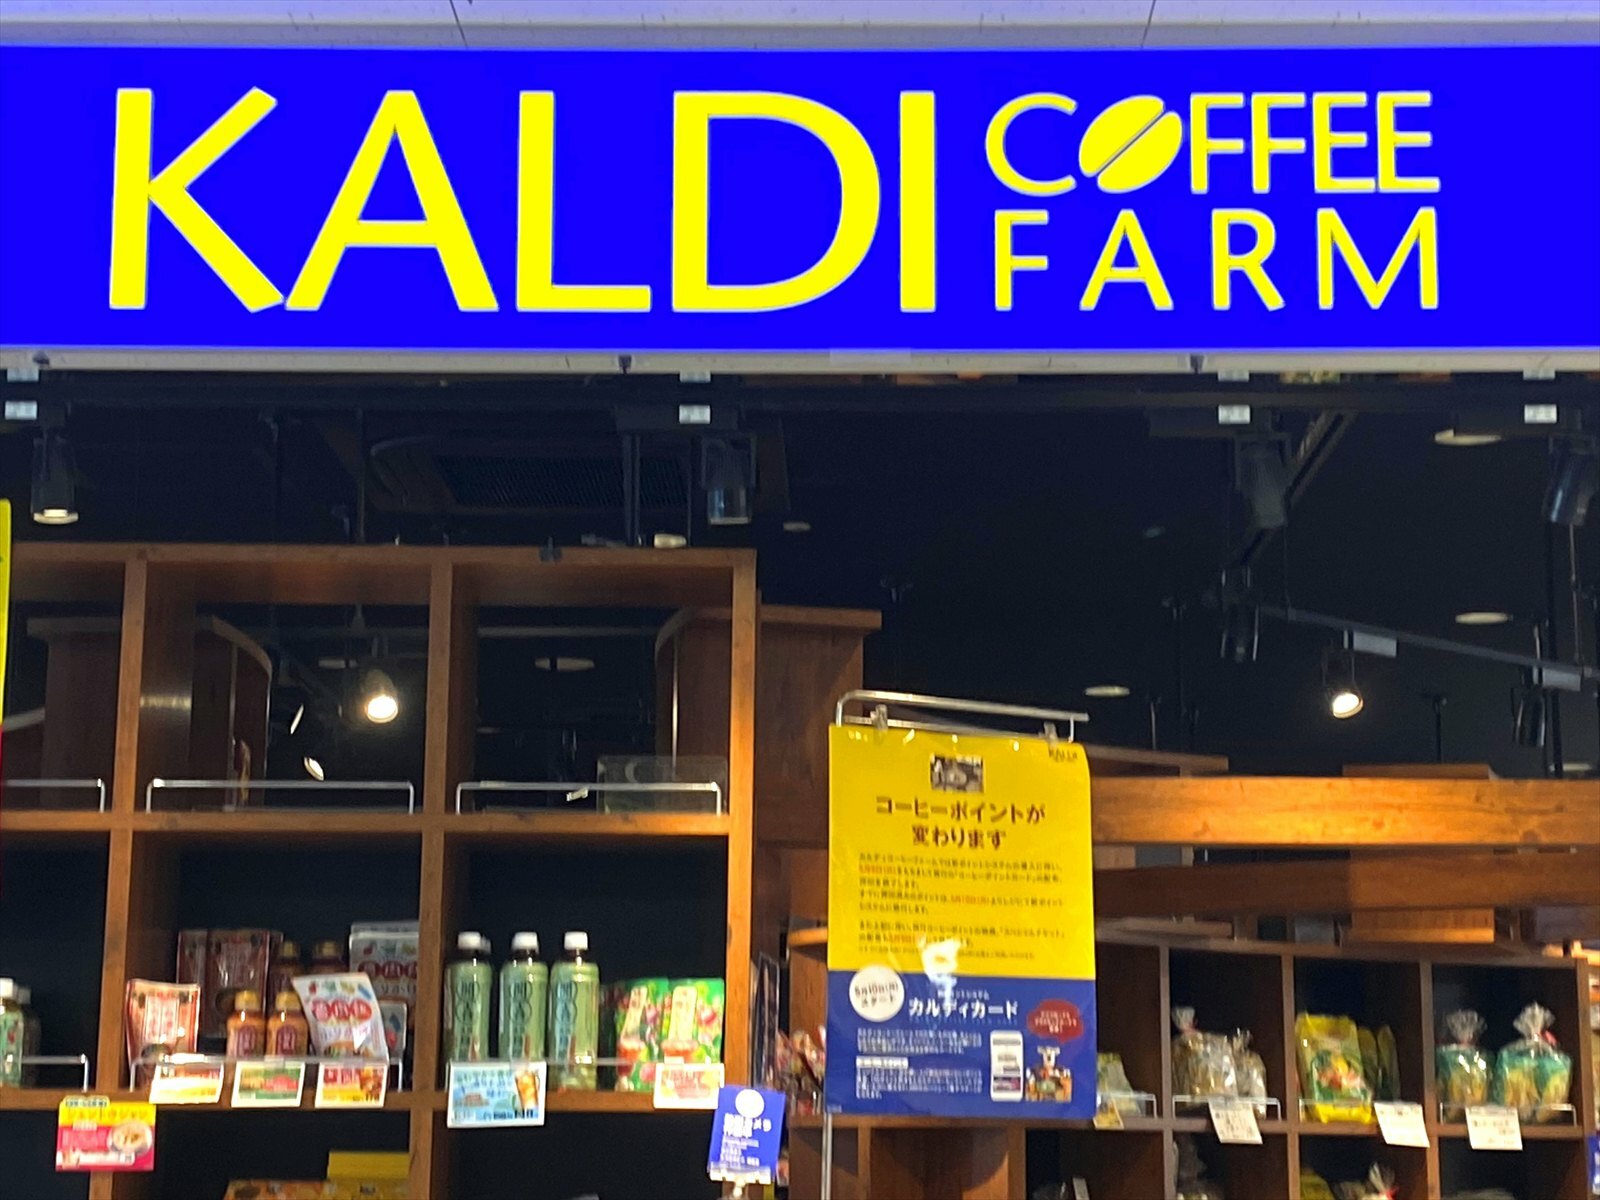 KALDI COFFEE FARM